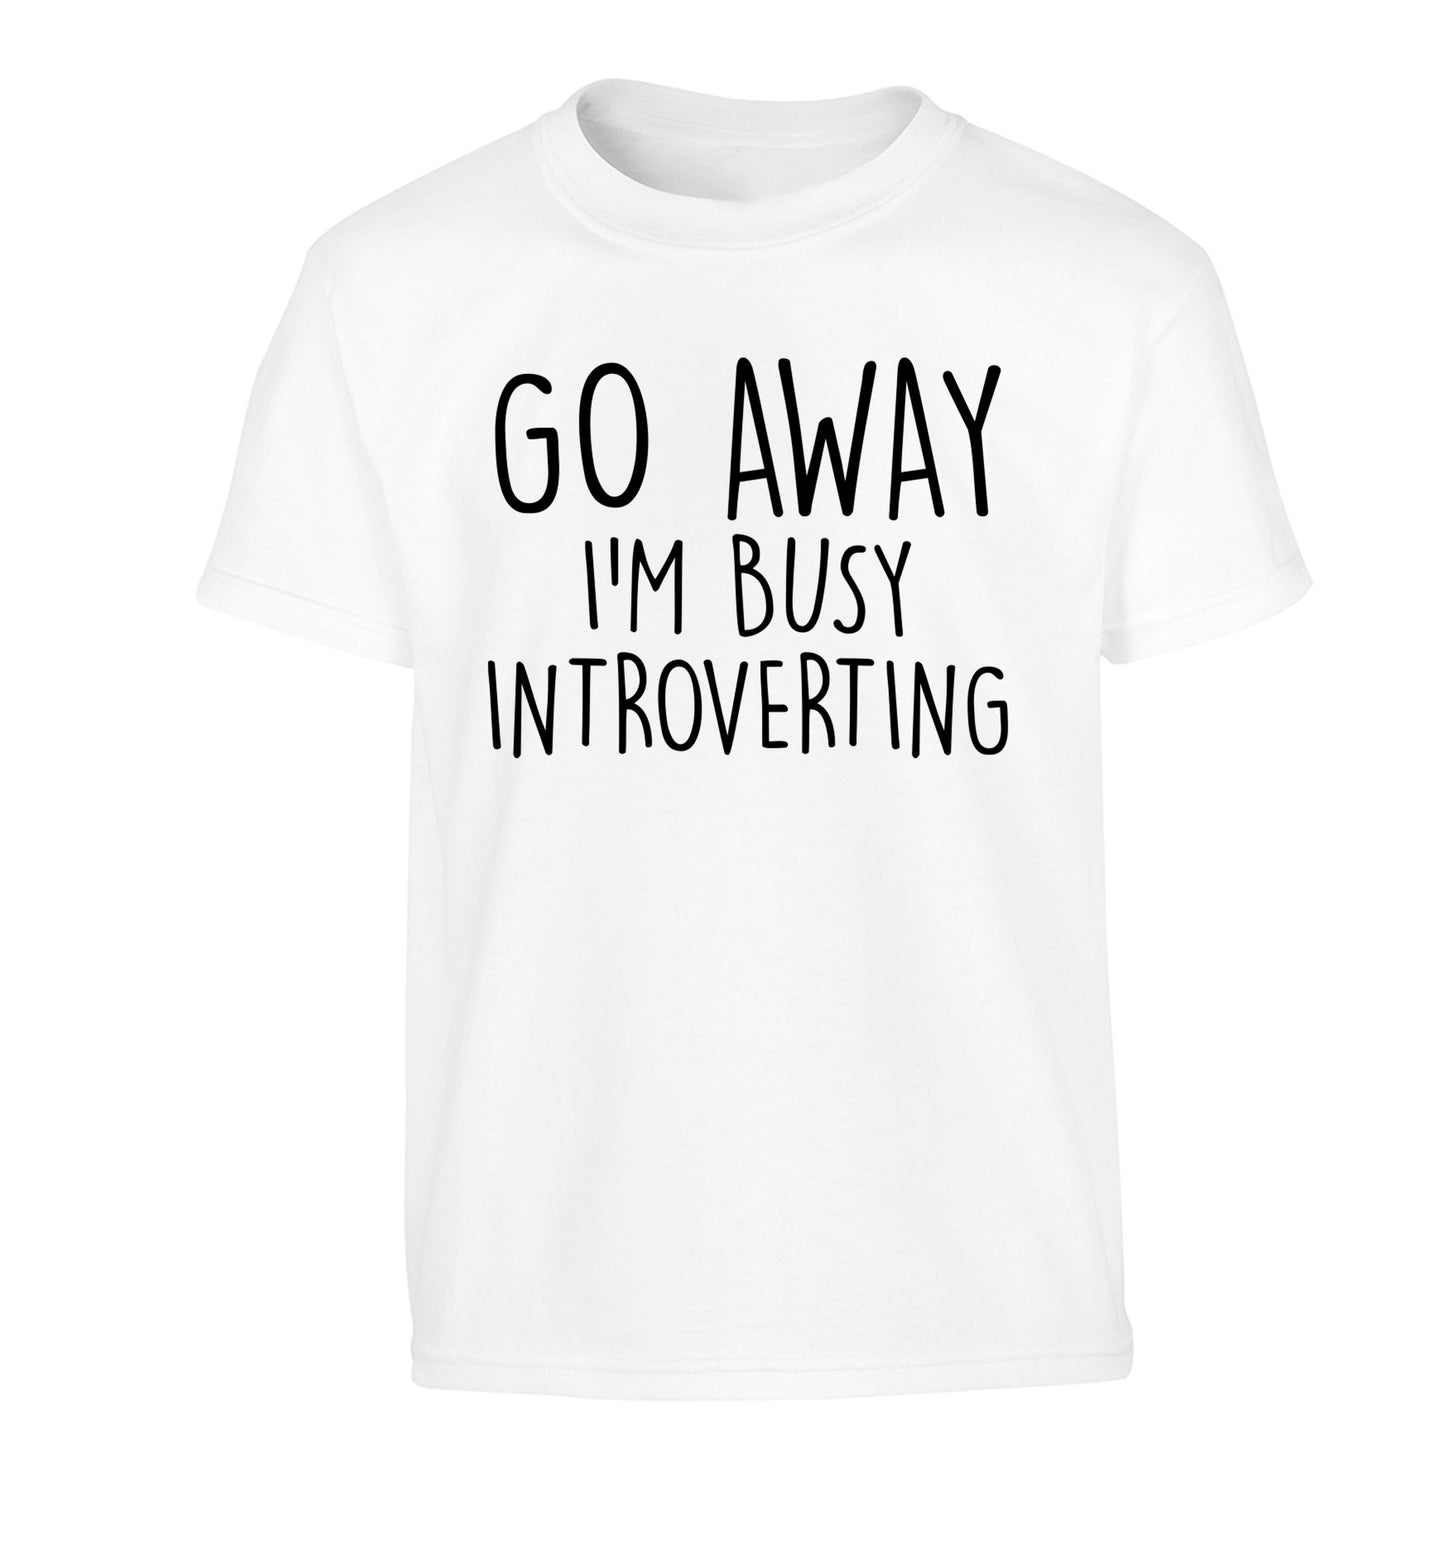 Go away I'm busy introverting Children's white Tshirt 12-13 Years